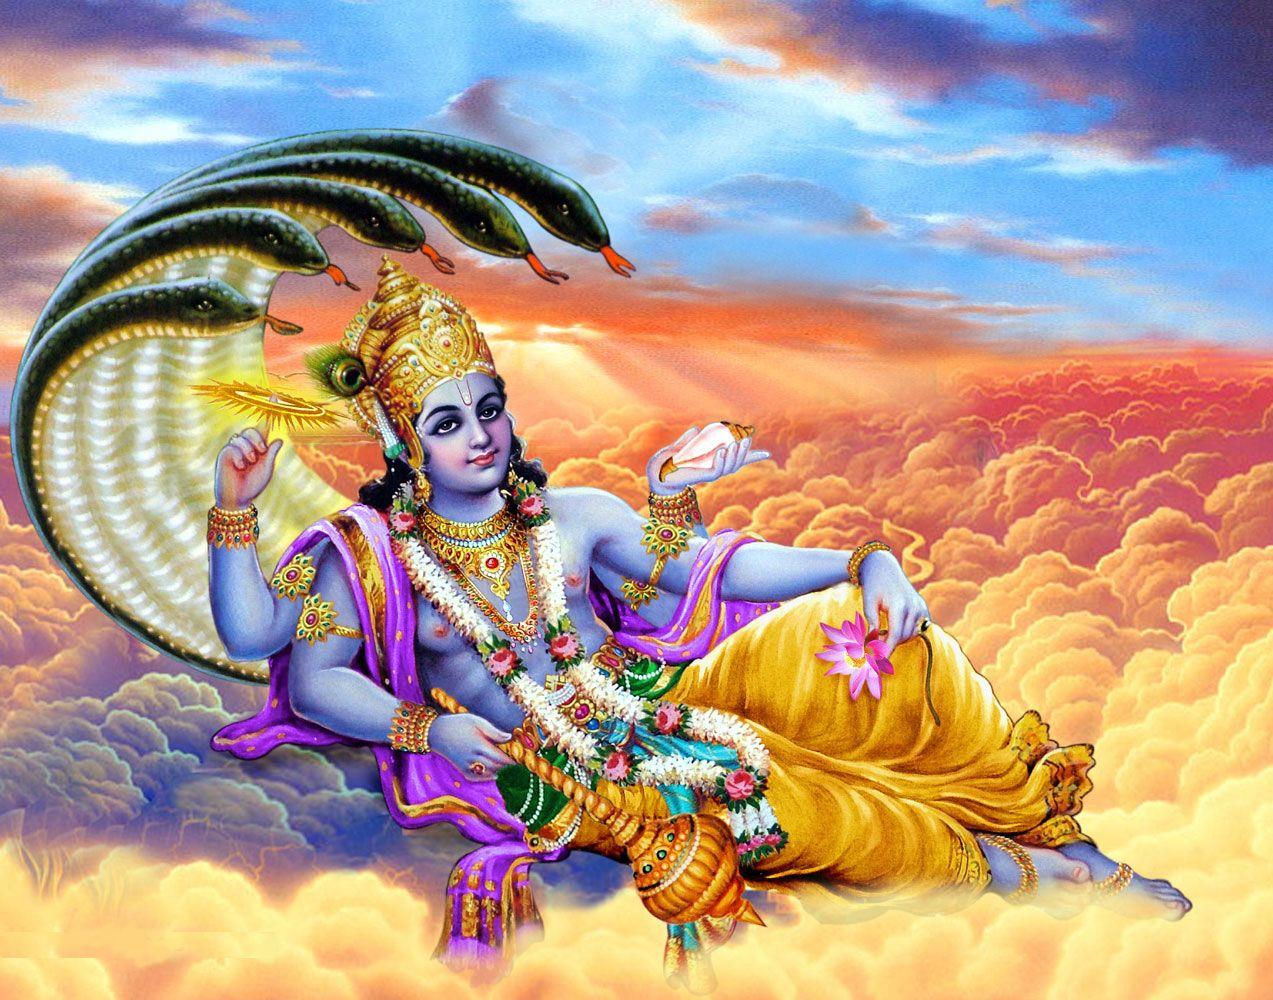 Lord Vishnu Image. Lord vishnu, Vishnu, Lord vishnu wallpaper